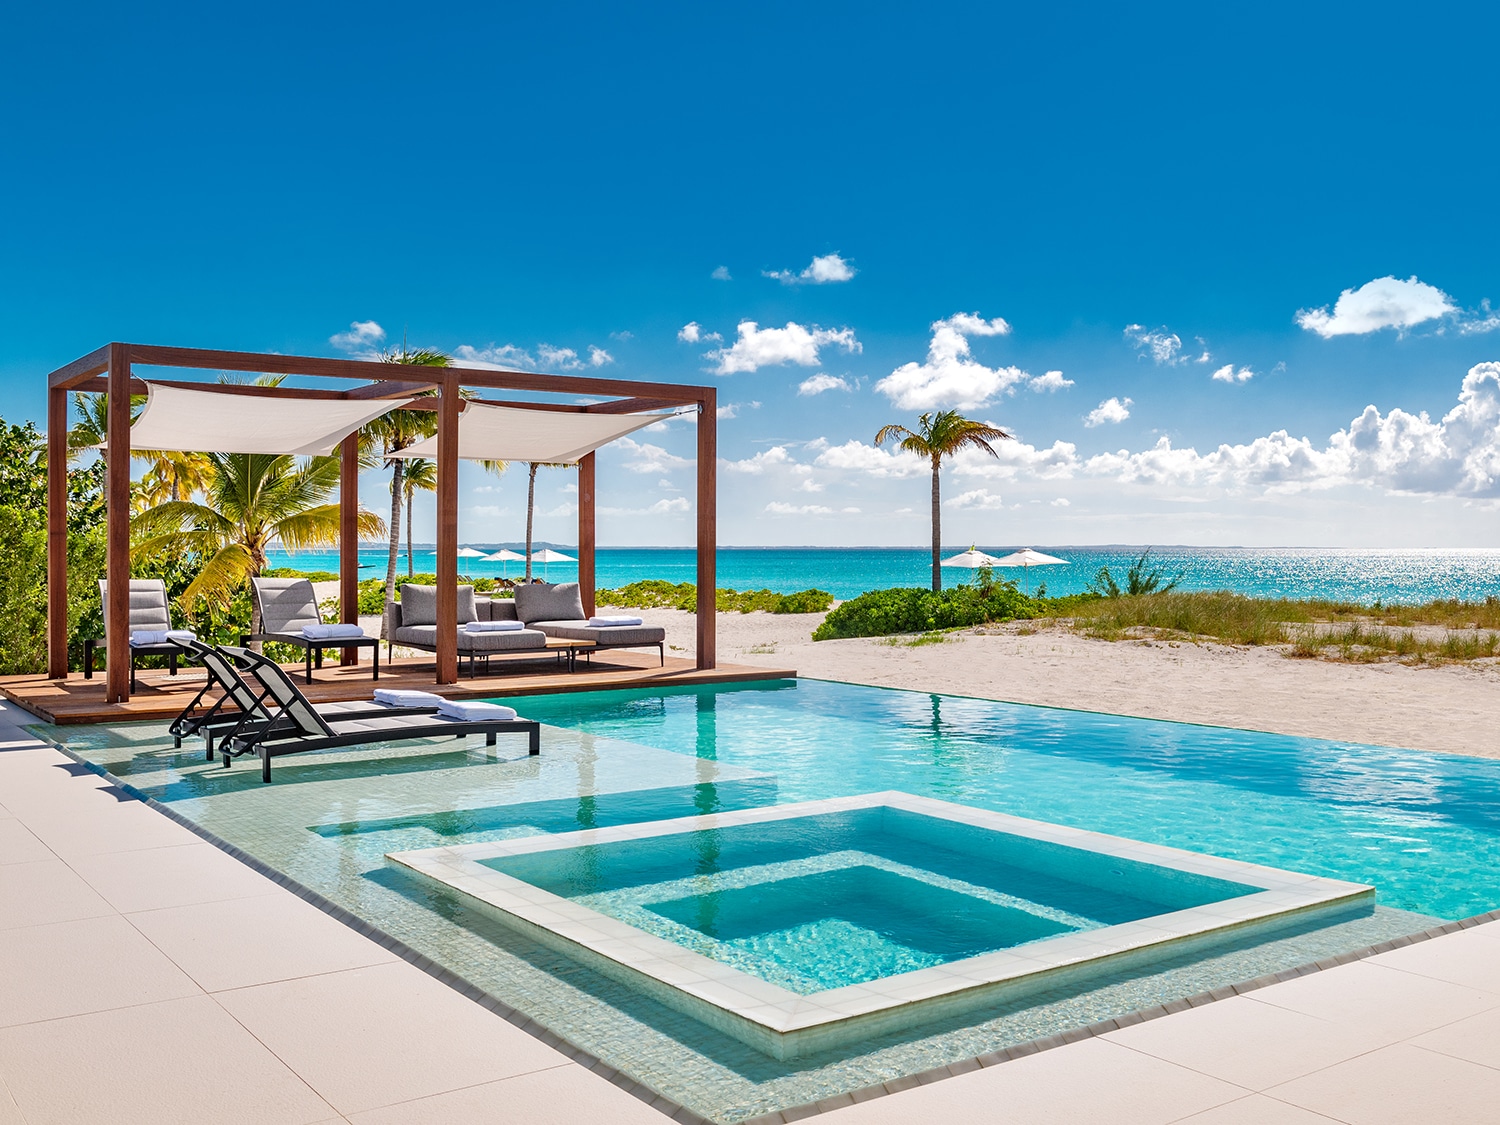 Key Caribe pool